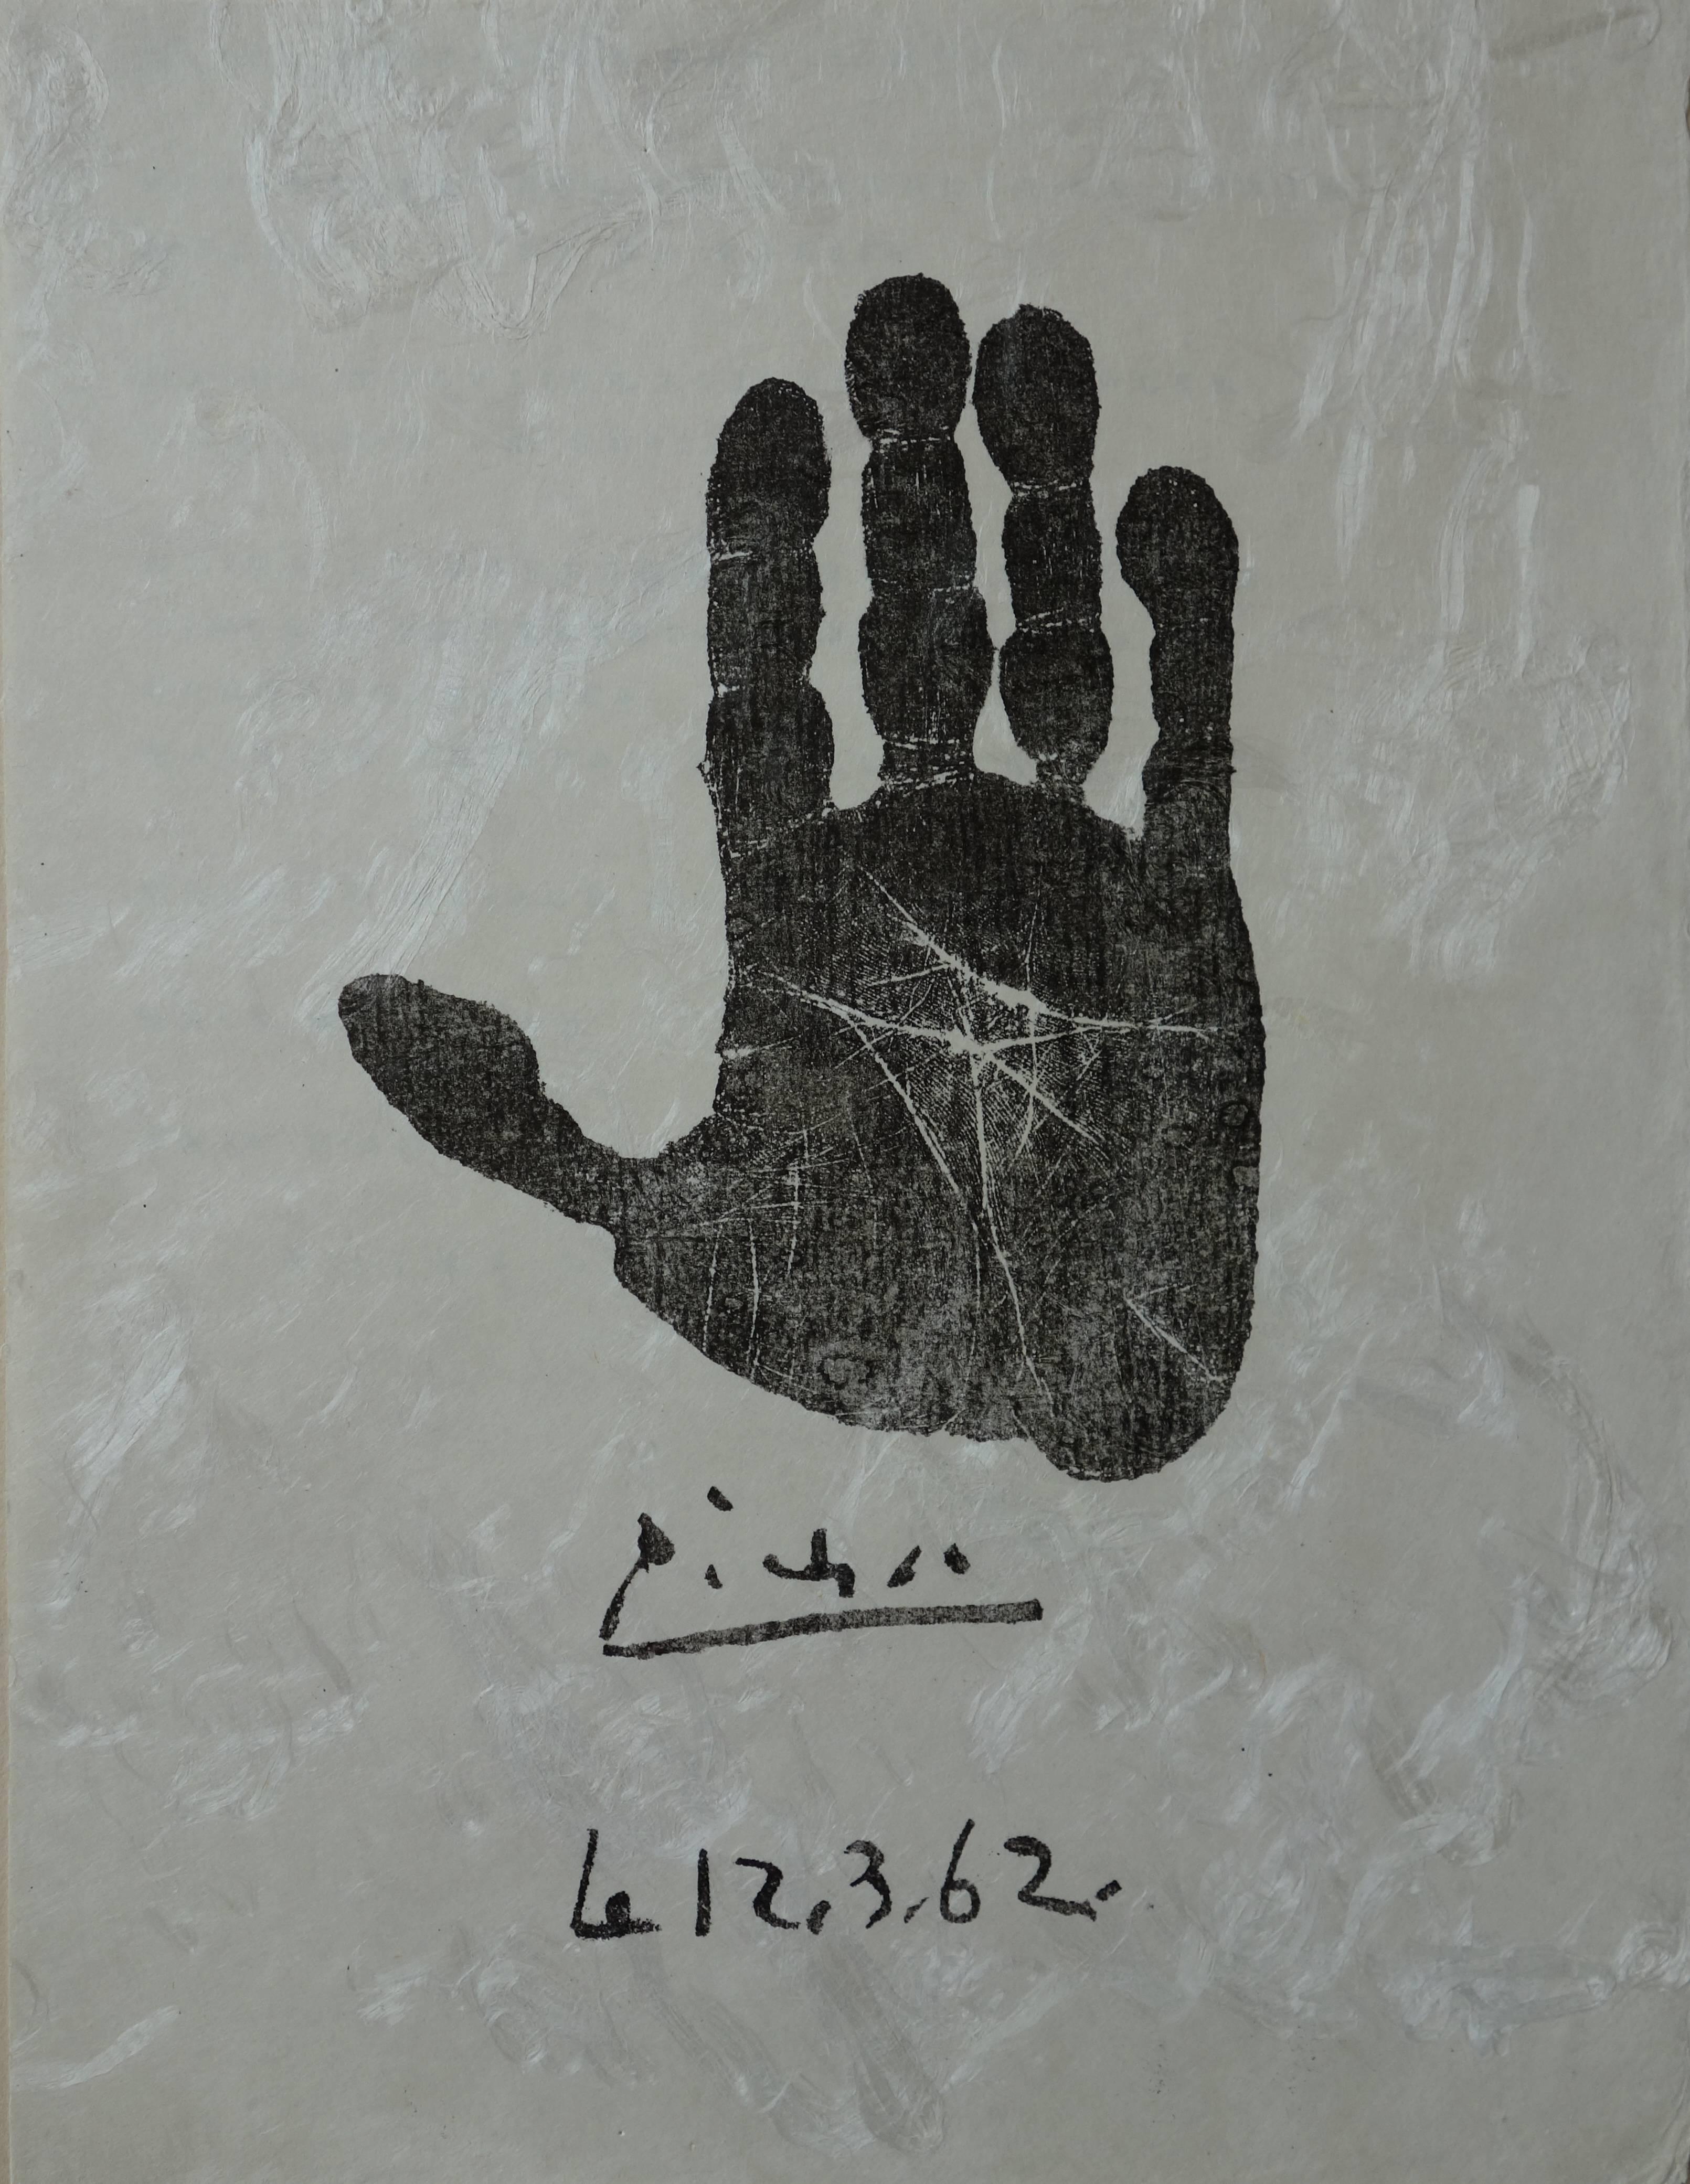 Pablo Picasso Figurative Print - Hand of the Artist - Original lithograph - 1962